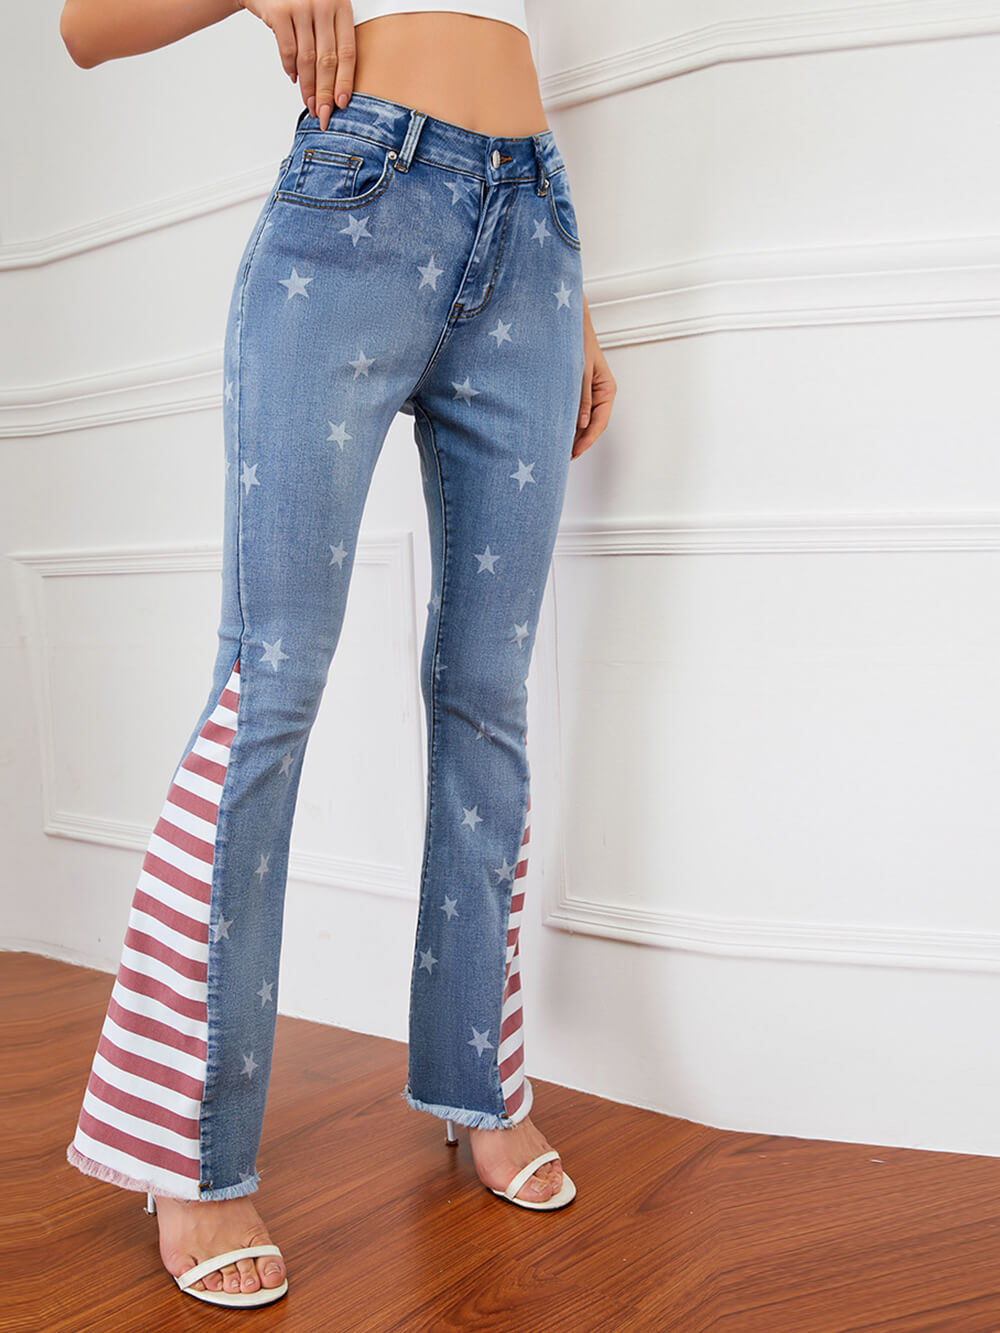 Tryckta Stars Colorblock Stripe Jeans